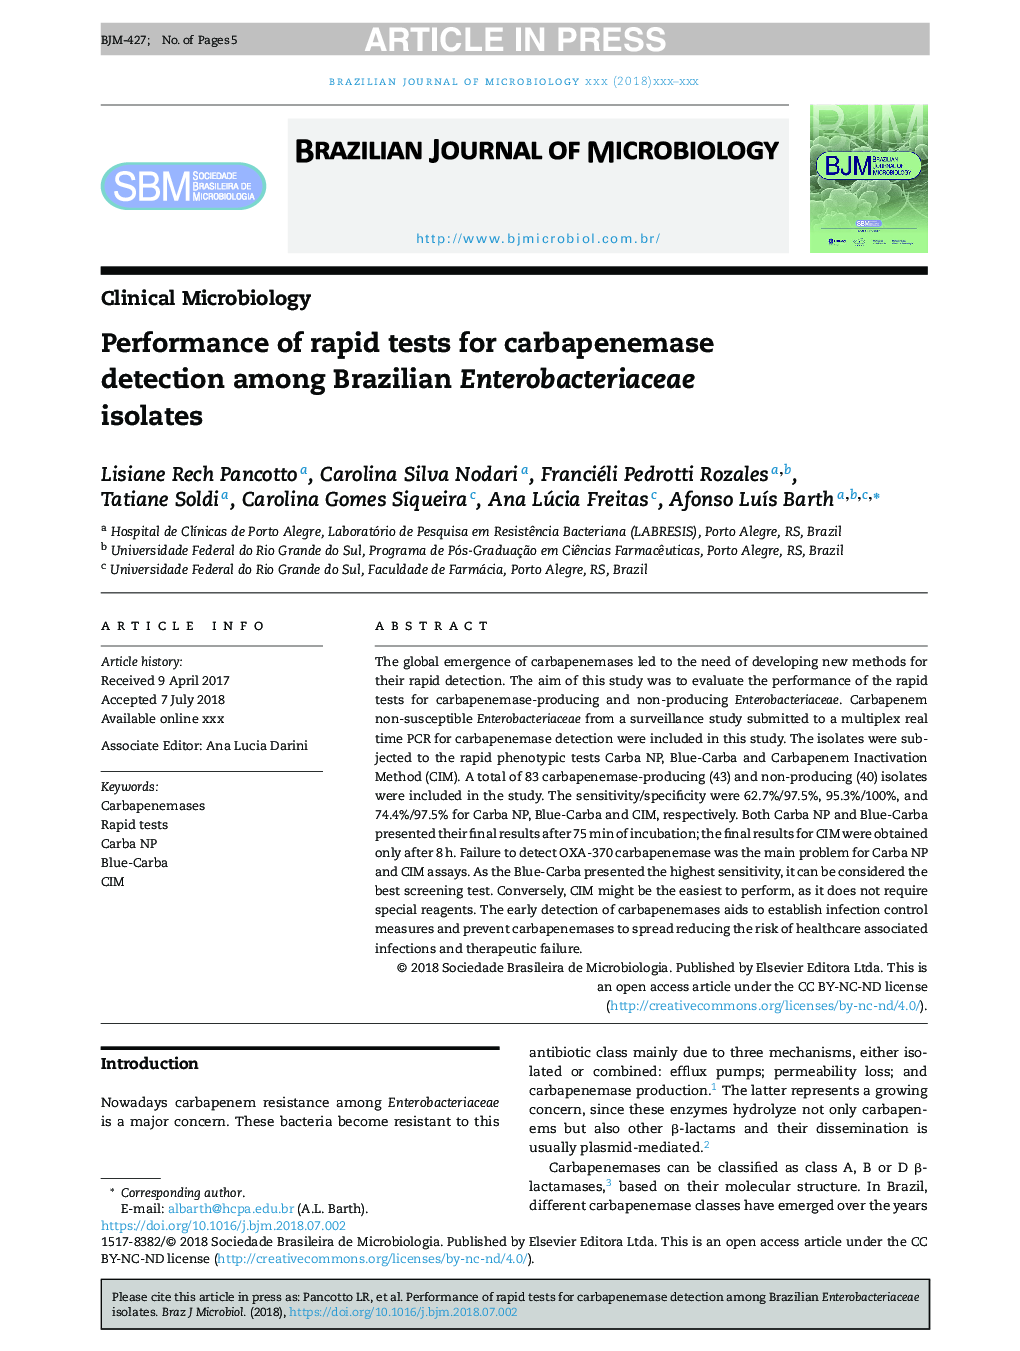 Performance of rapid tests for carbapenemase detection among Brazilian Enterobacteriaceae isolates